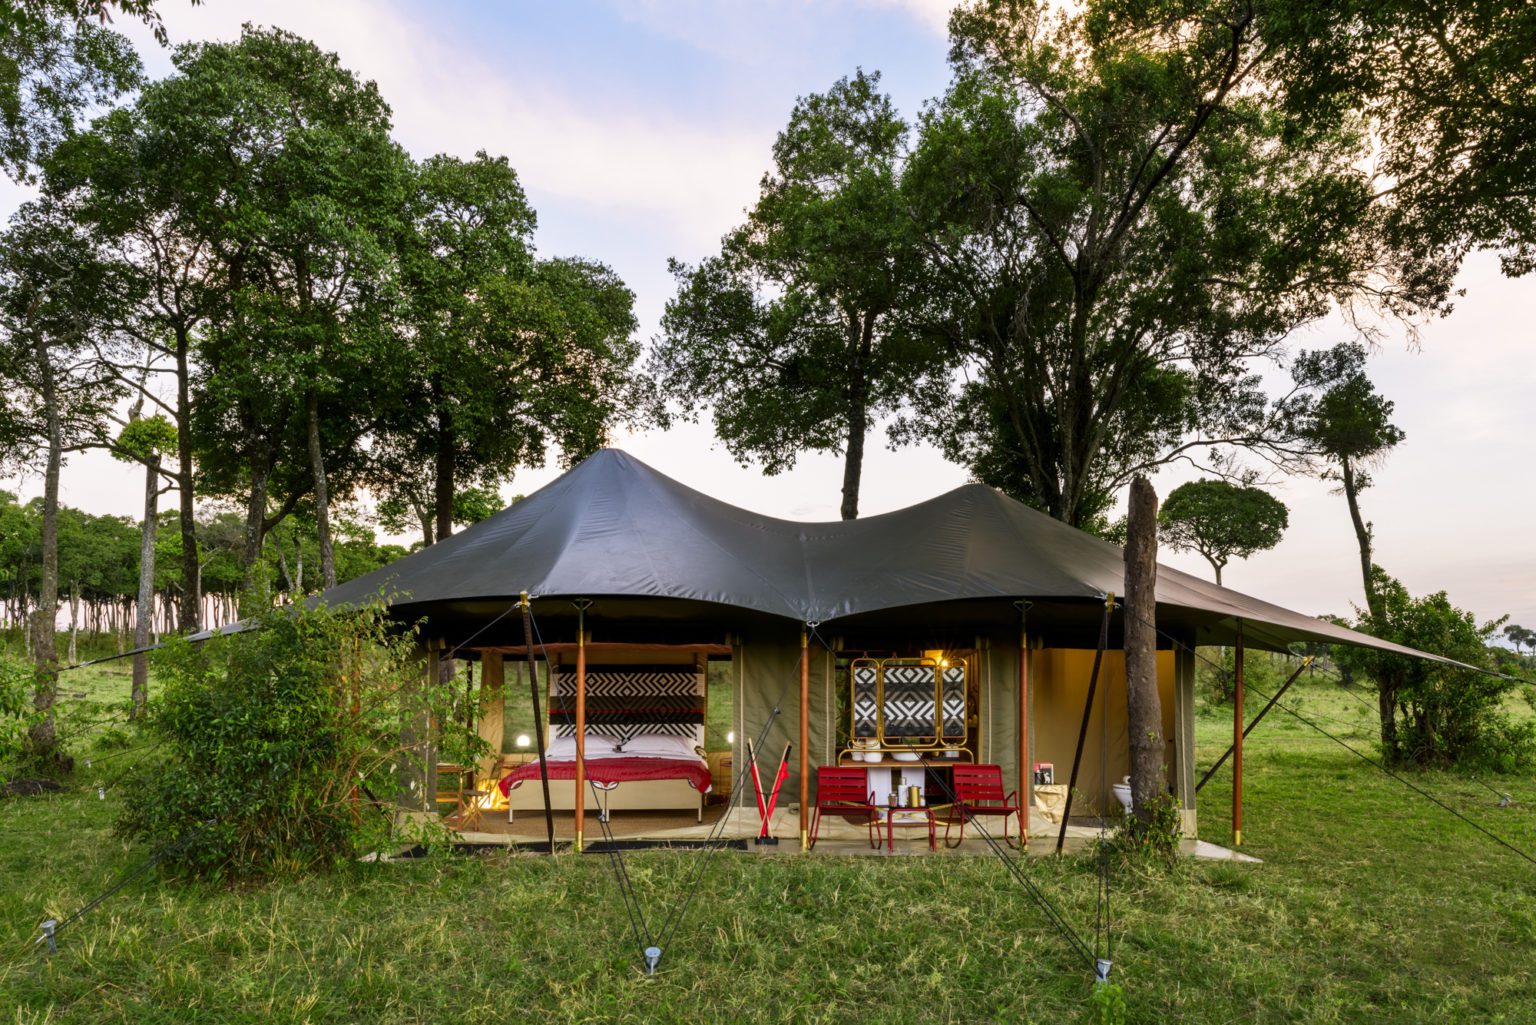 angama safari camp tent set between trees on the plains of the masai mara